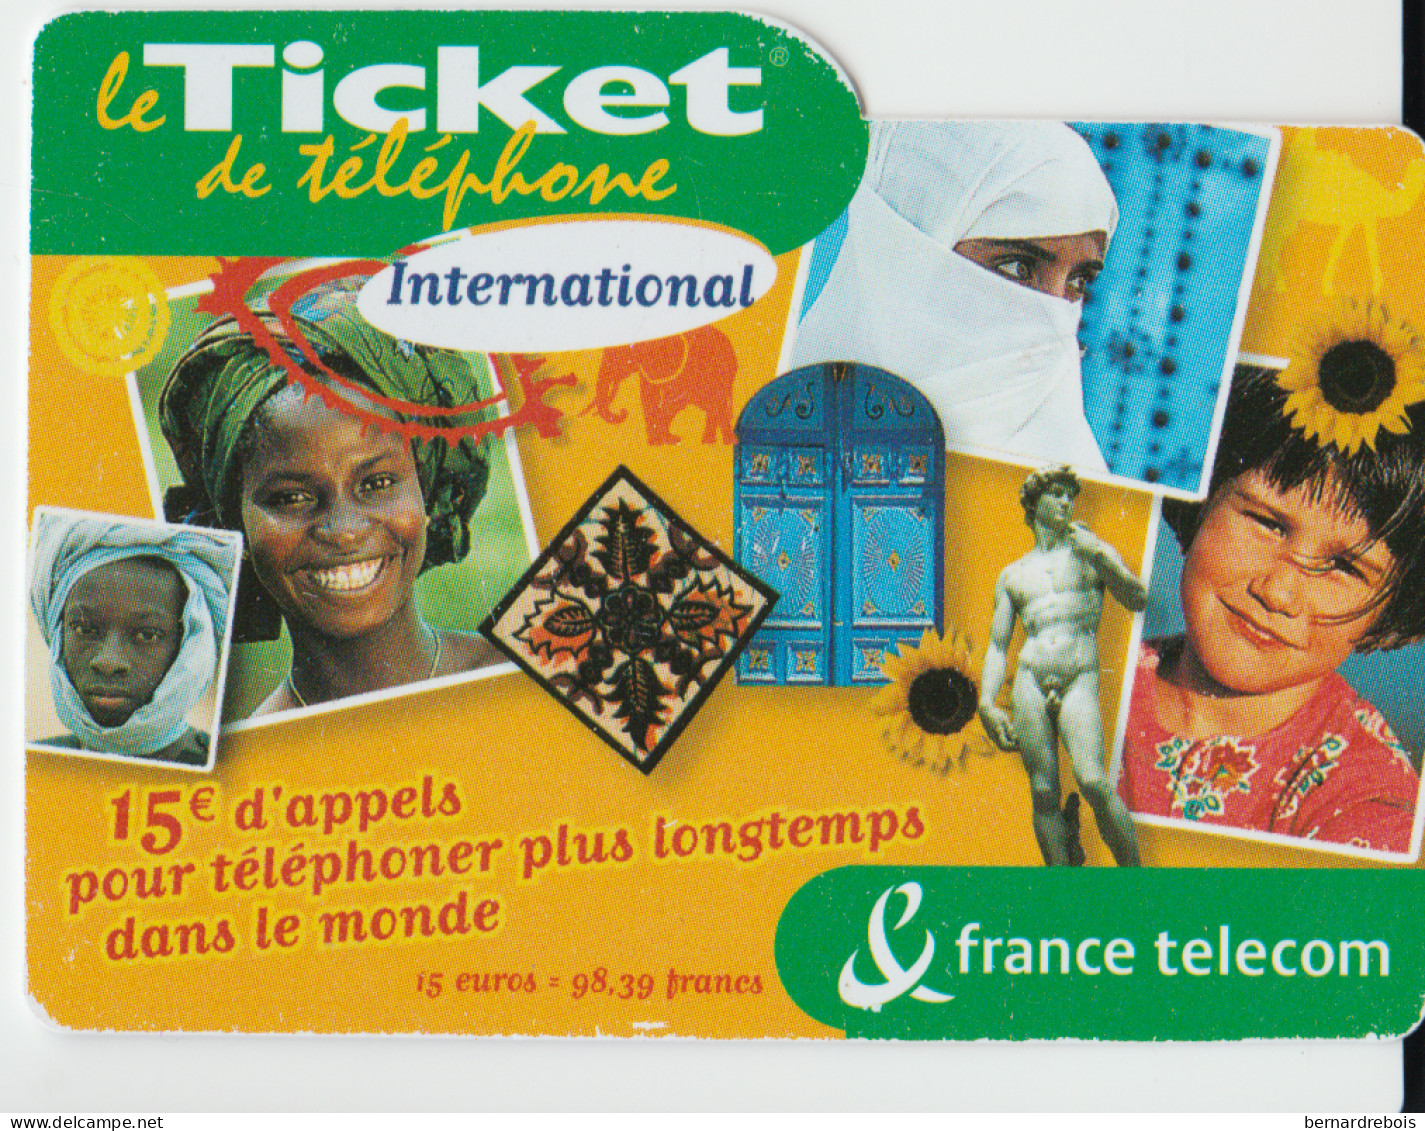 TC24 - TICKET TELEPHONE INTERNATIONAL 15 €, Pour 1 € - Cellphone Cards (refills)